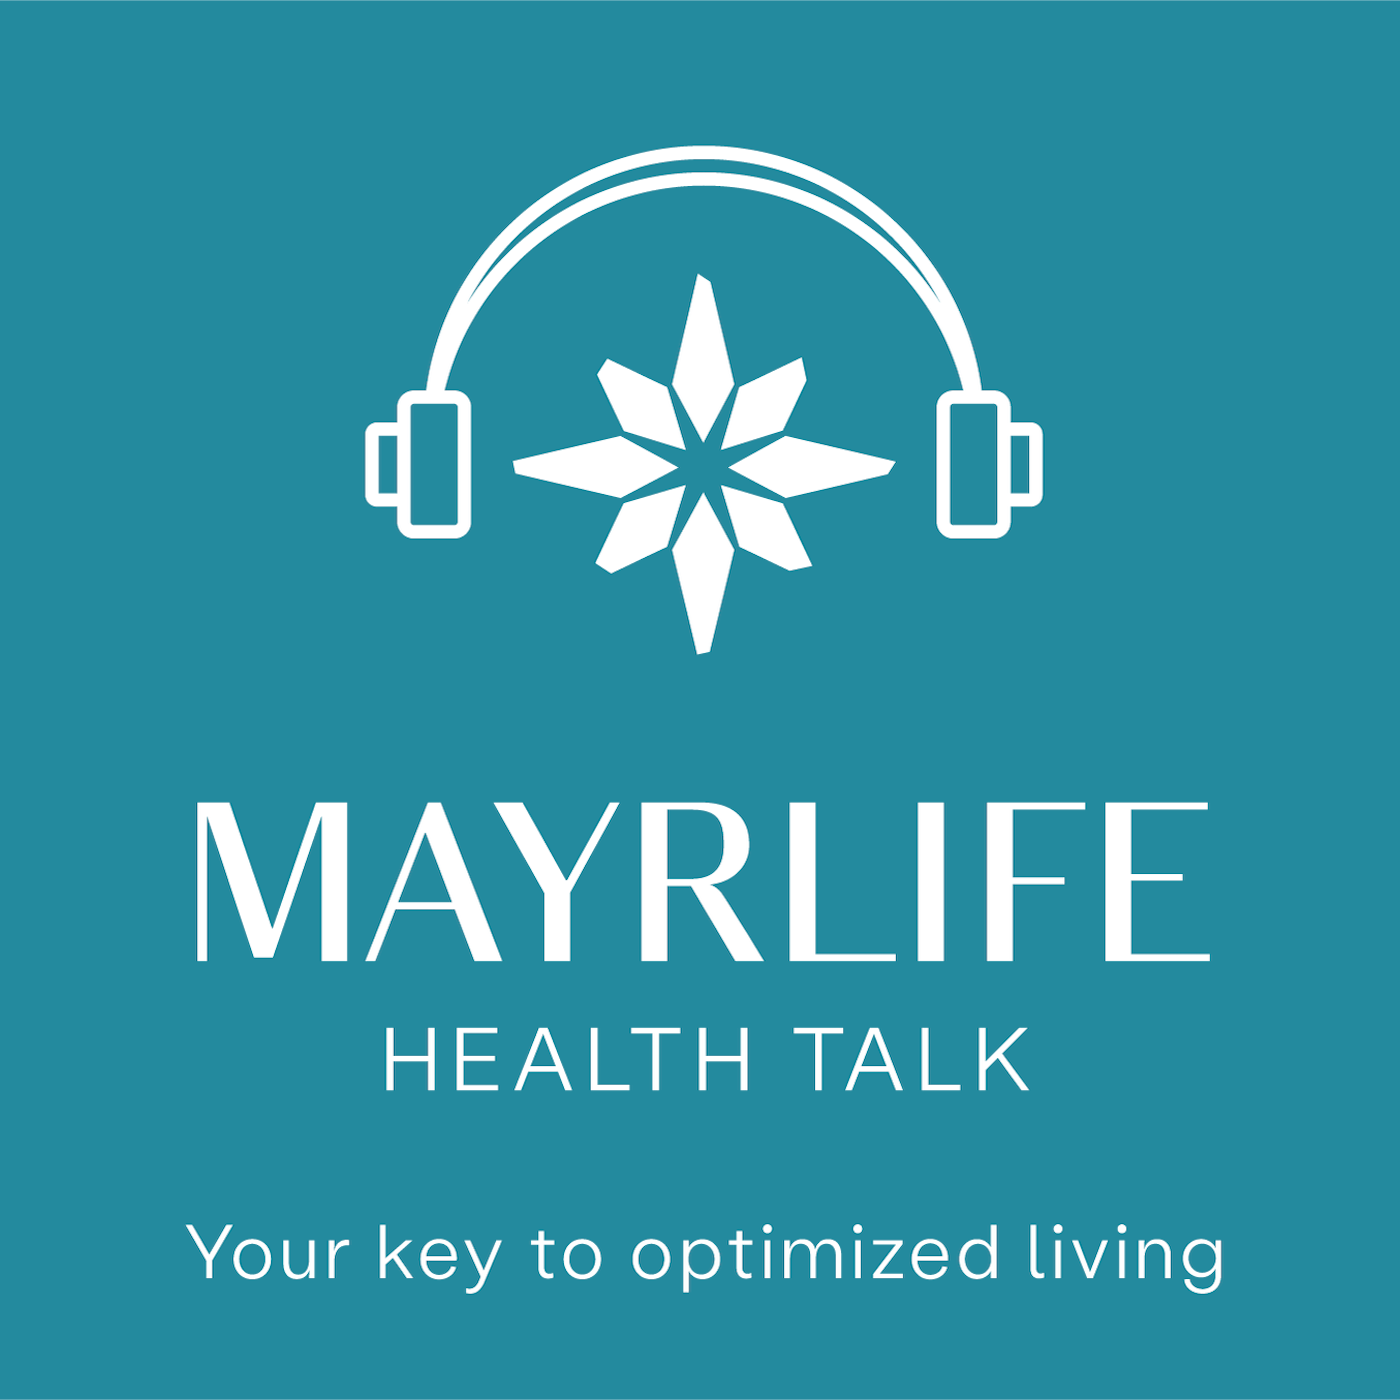 MAYRLIFE Health Talk